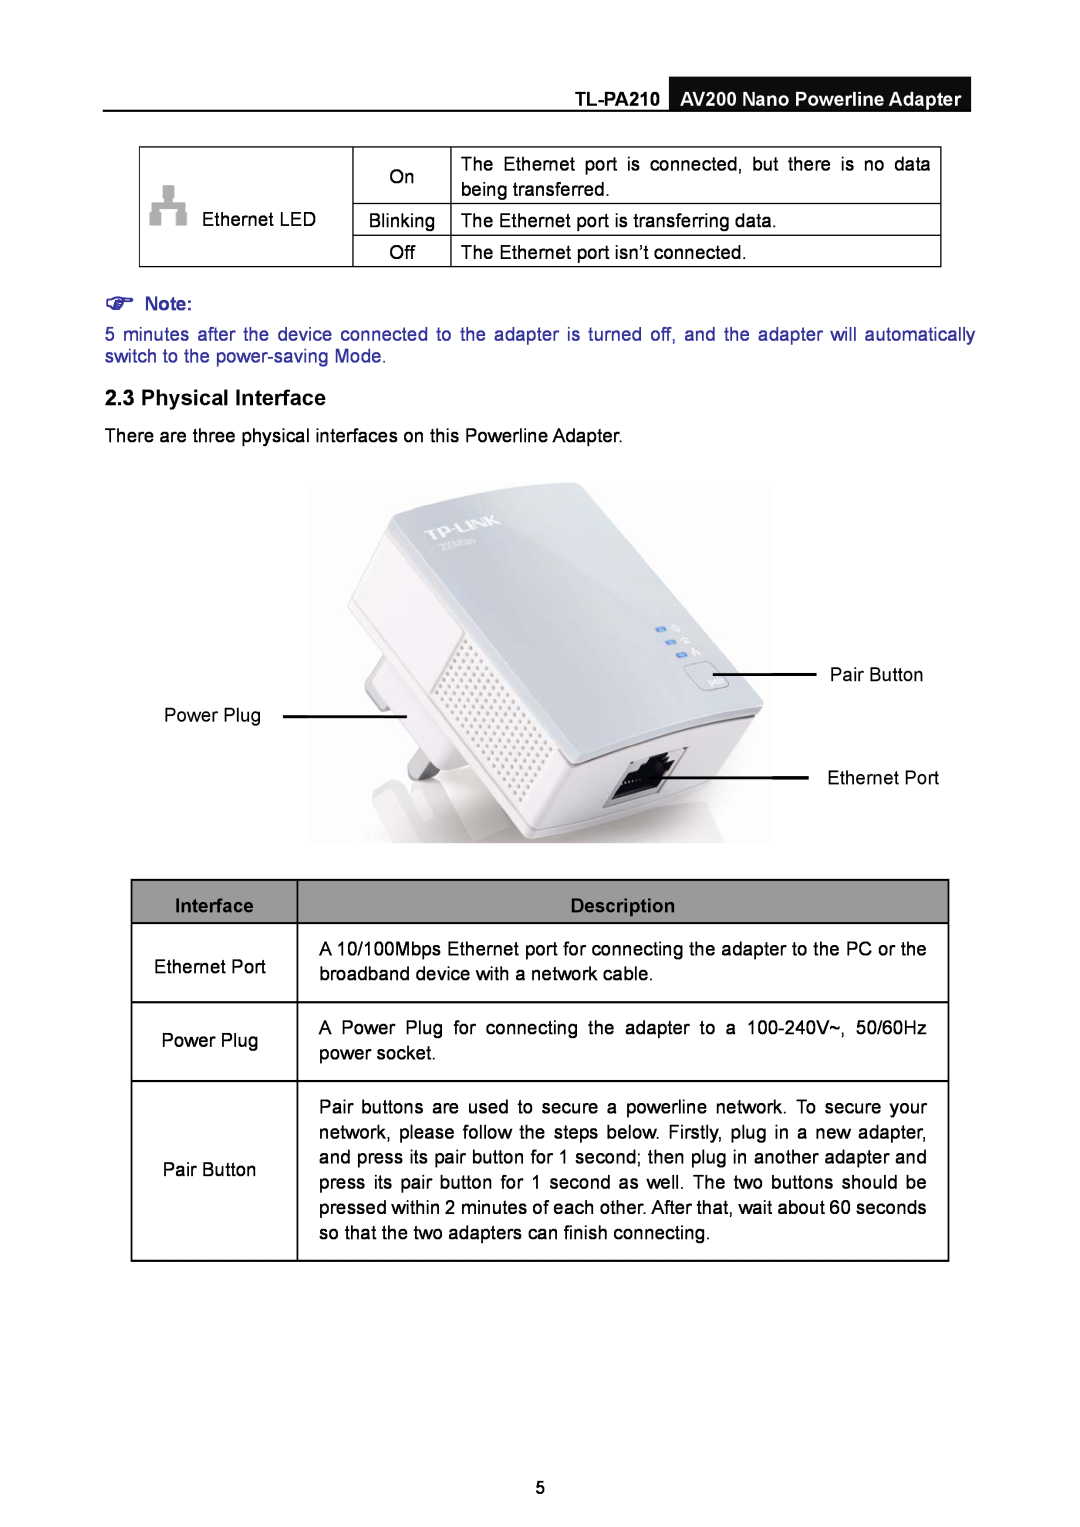 TP-Link TL-PA210 manual Physical Interface, Description 